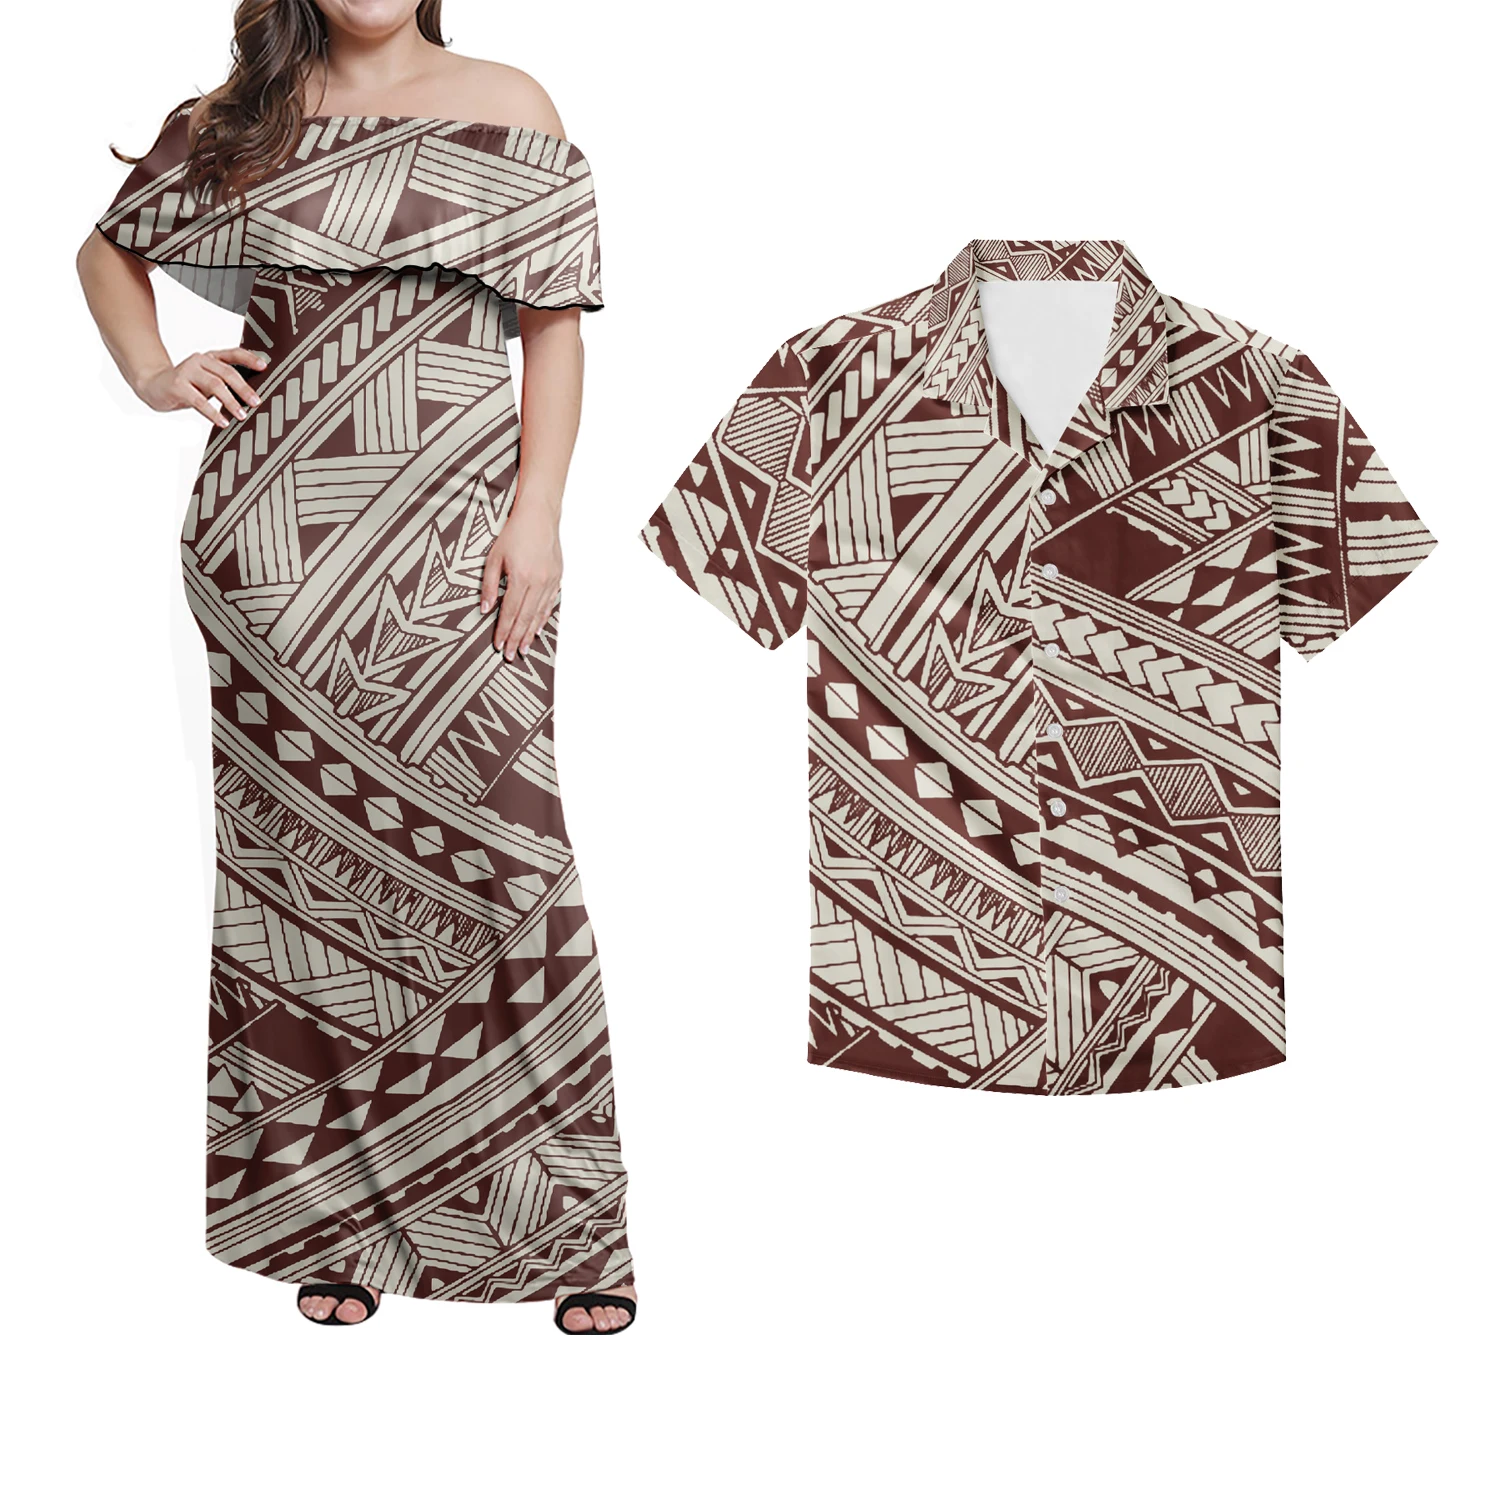 Famous Brand Polynesian Samoa Tribal Print Customized Couple Outfits ...